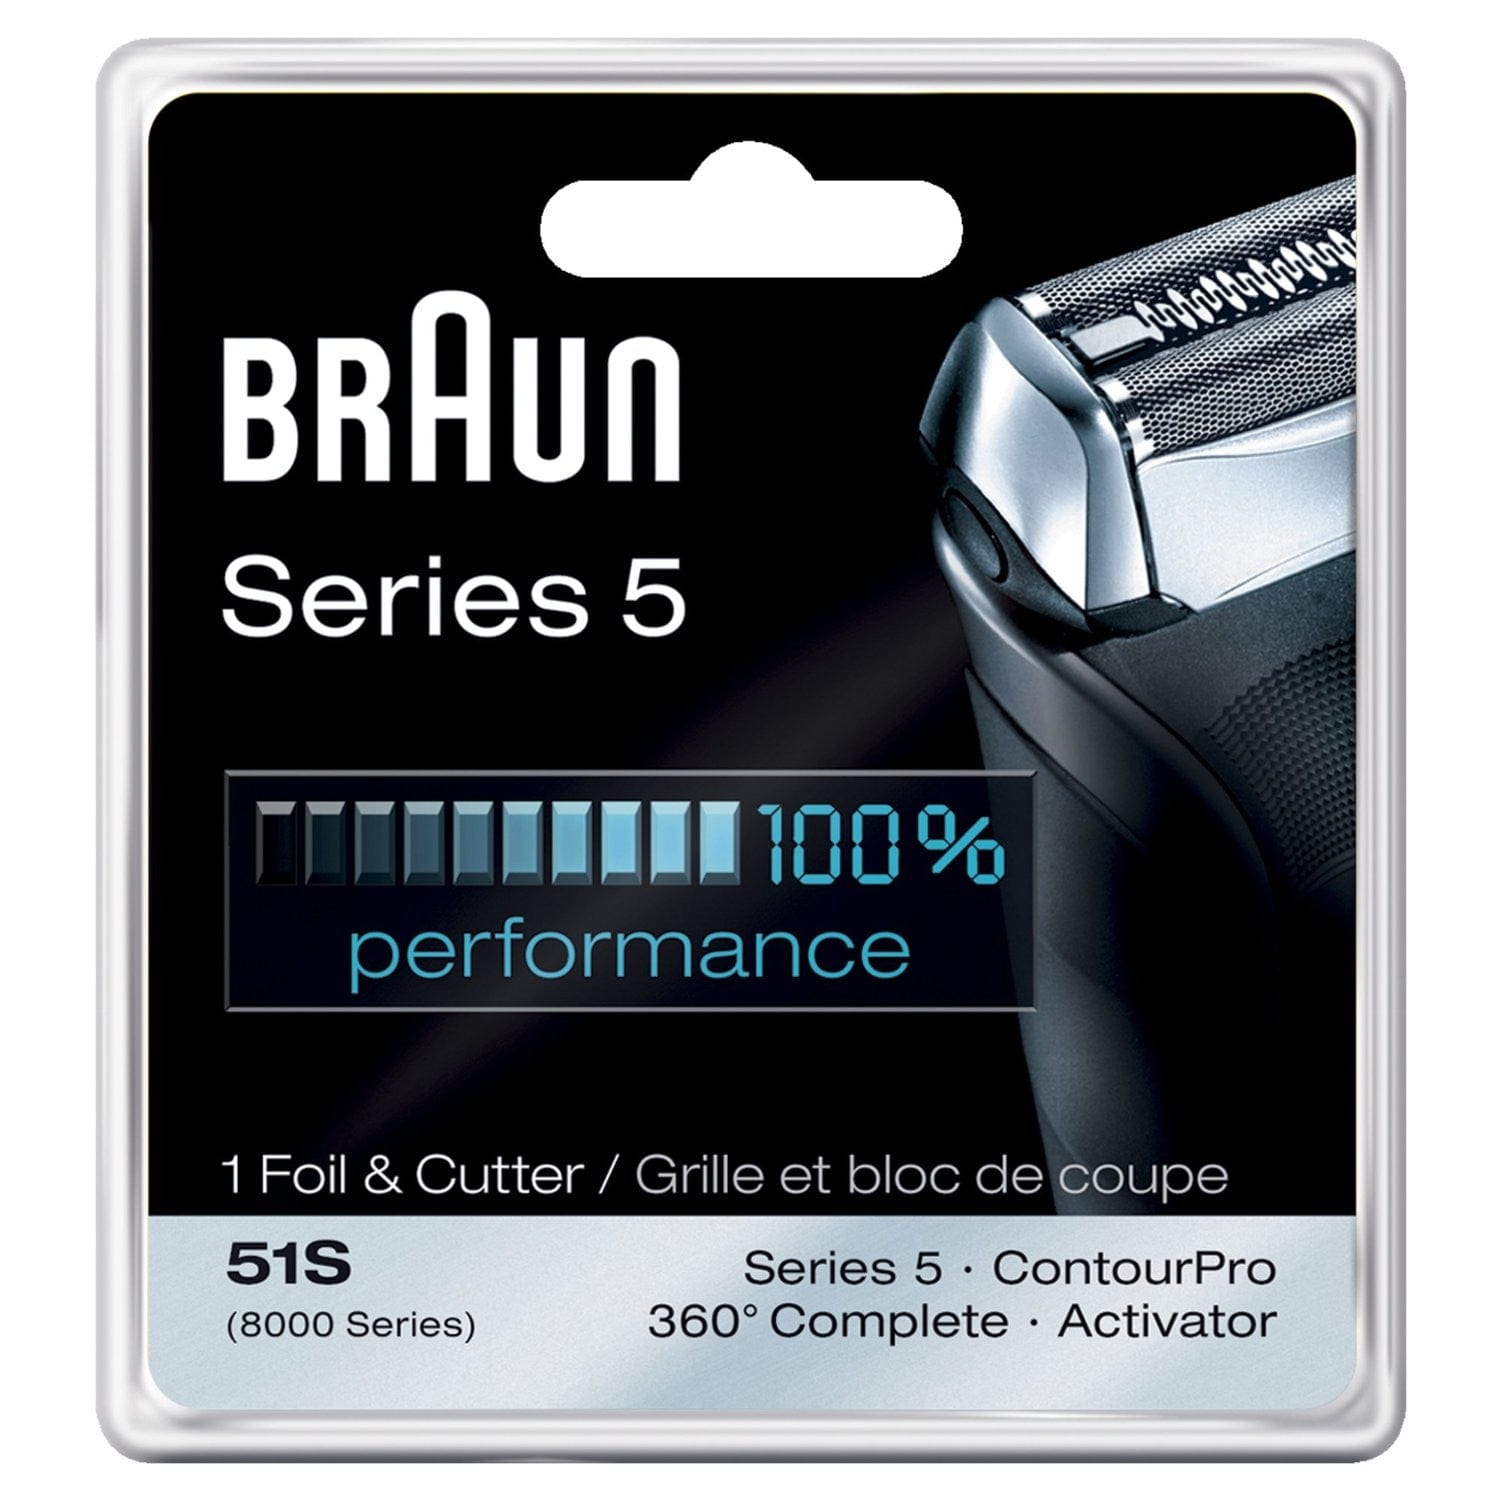 Braun Series 5 Foil & Cutter 51S ContourPro, 360 Complete, Activator Canada